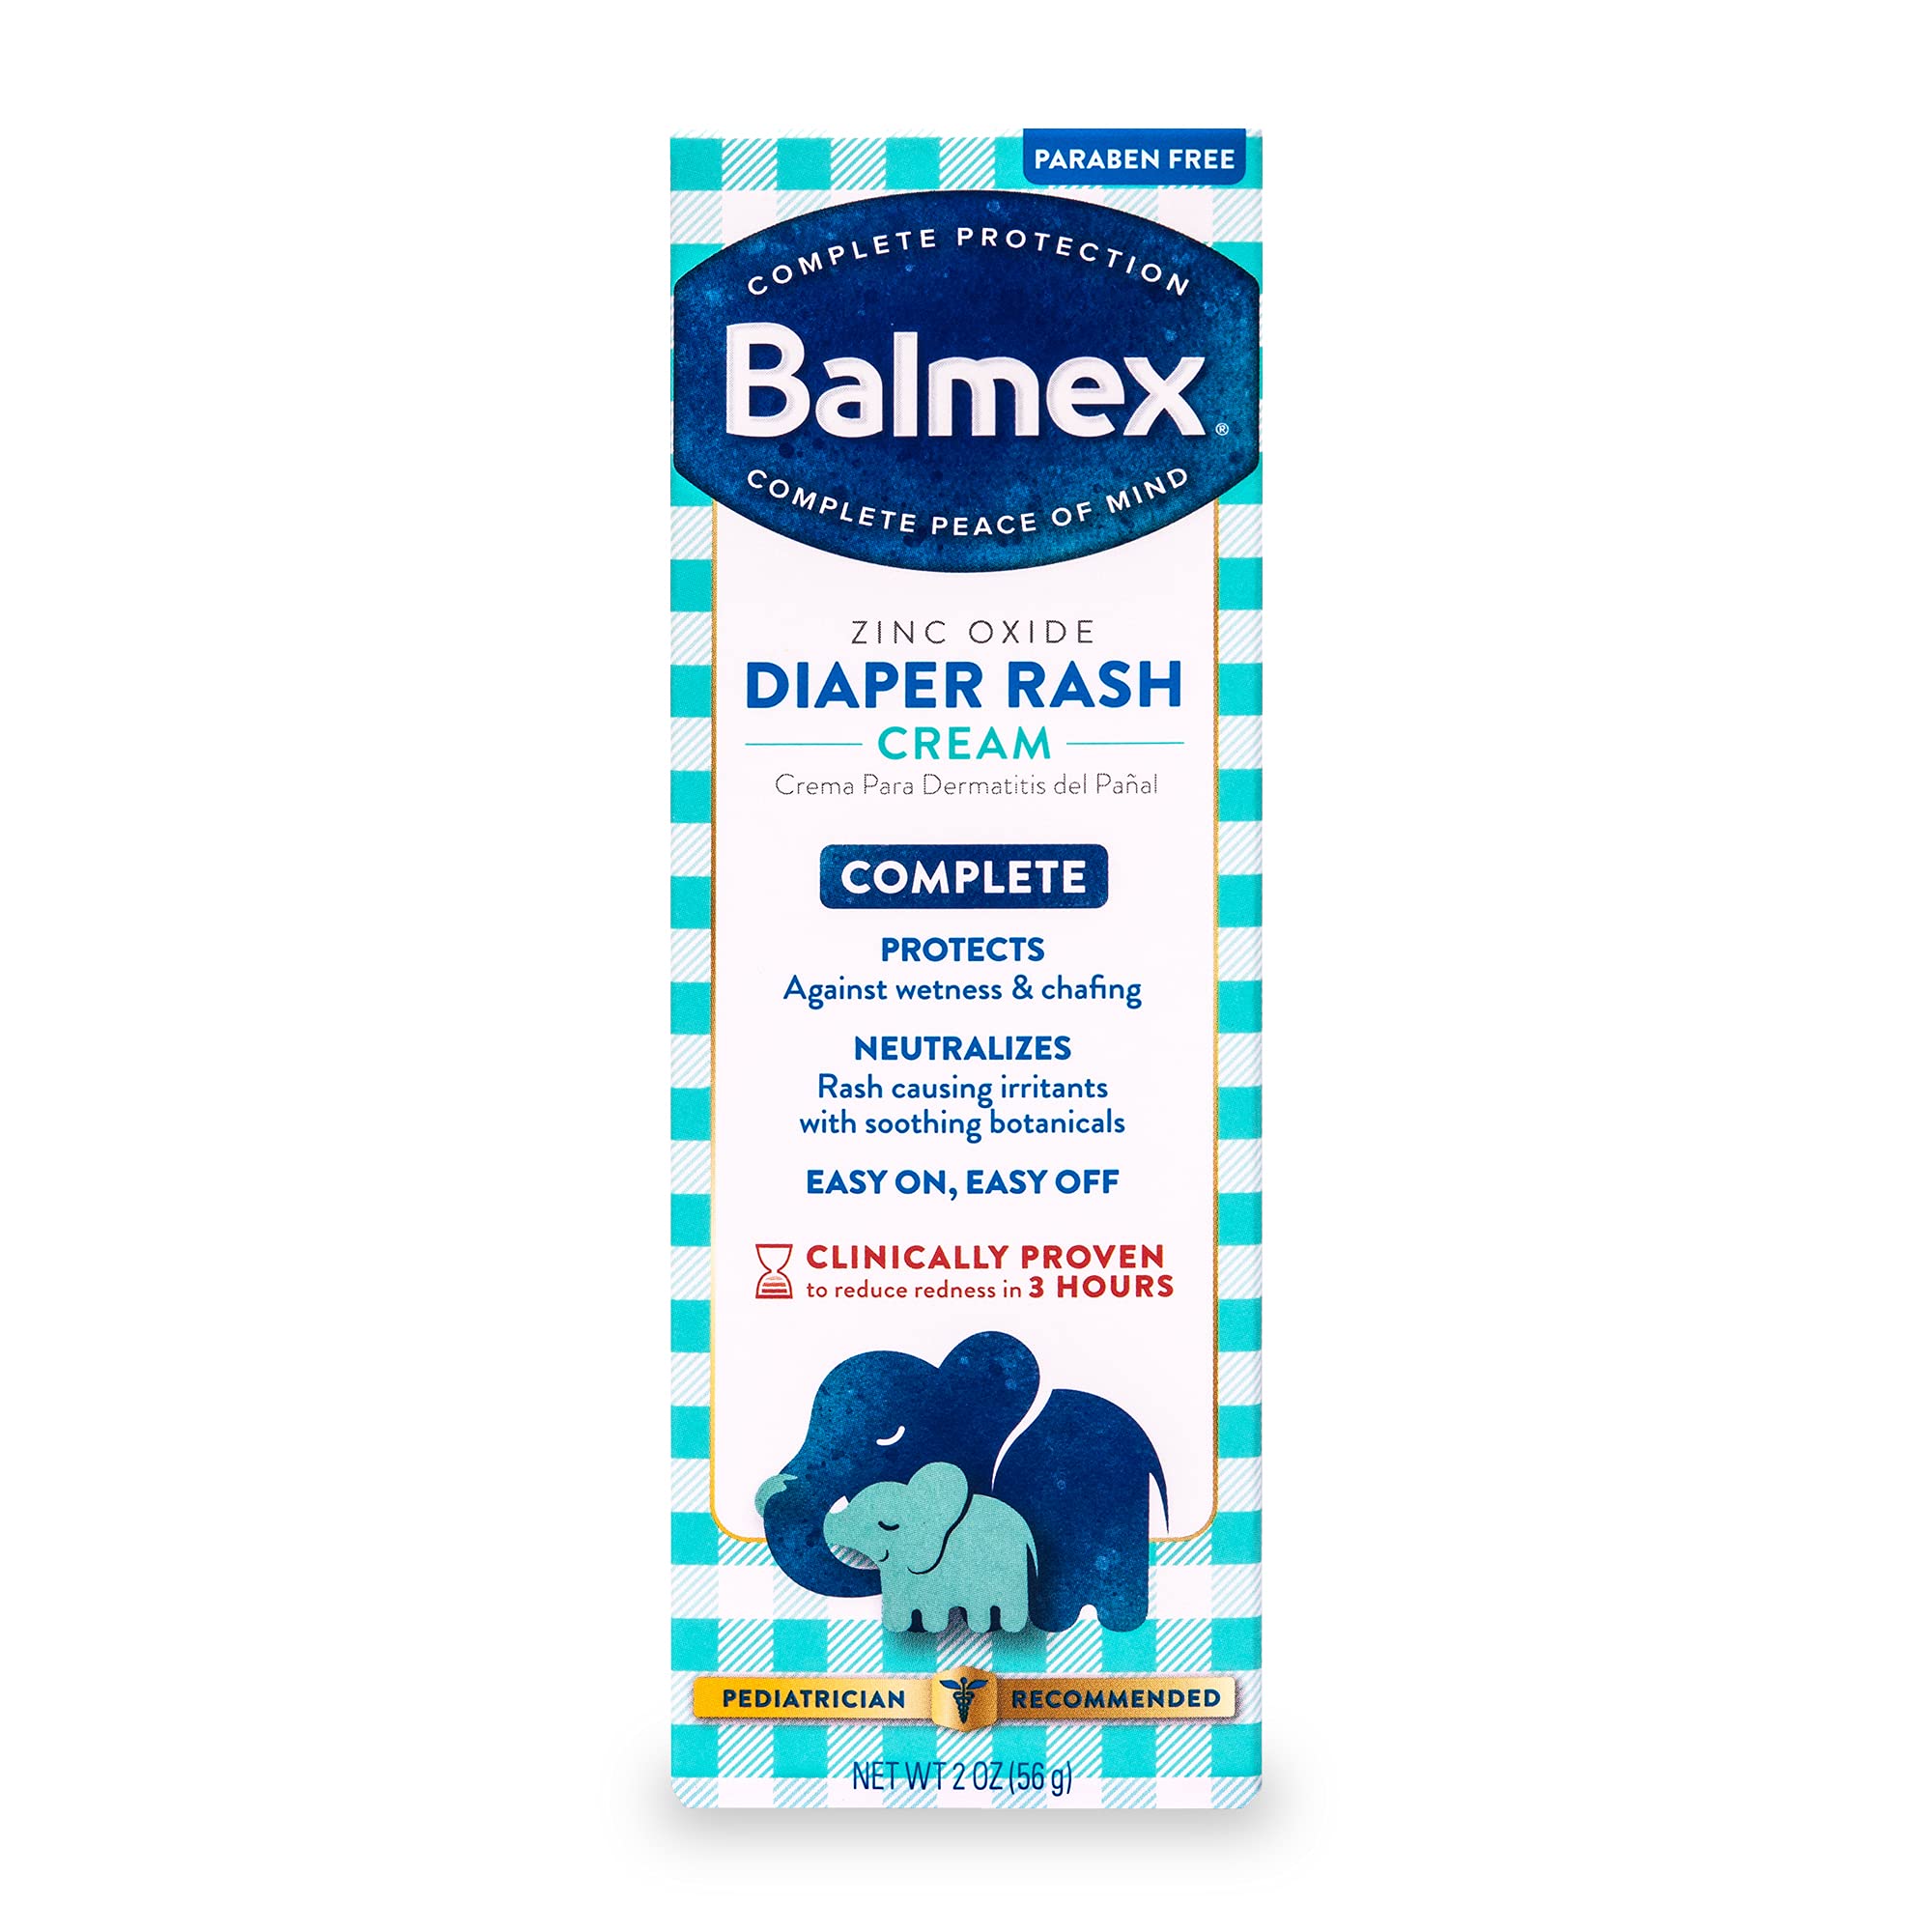 2-Oz Balmex Complete Protection Baby Diaper Rash Cream w/ Zinc Oxide $3.24 w/ S&S + Free Shipping w/ Prime or on $25+